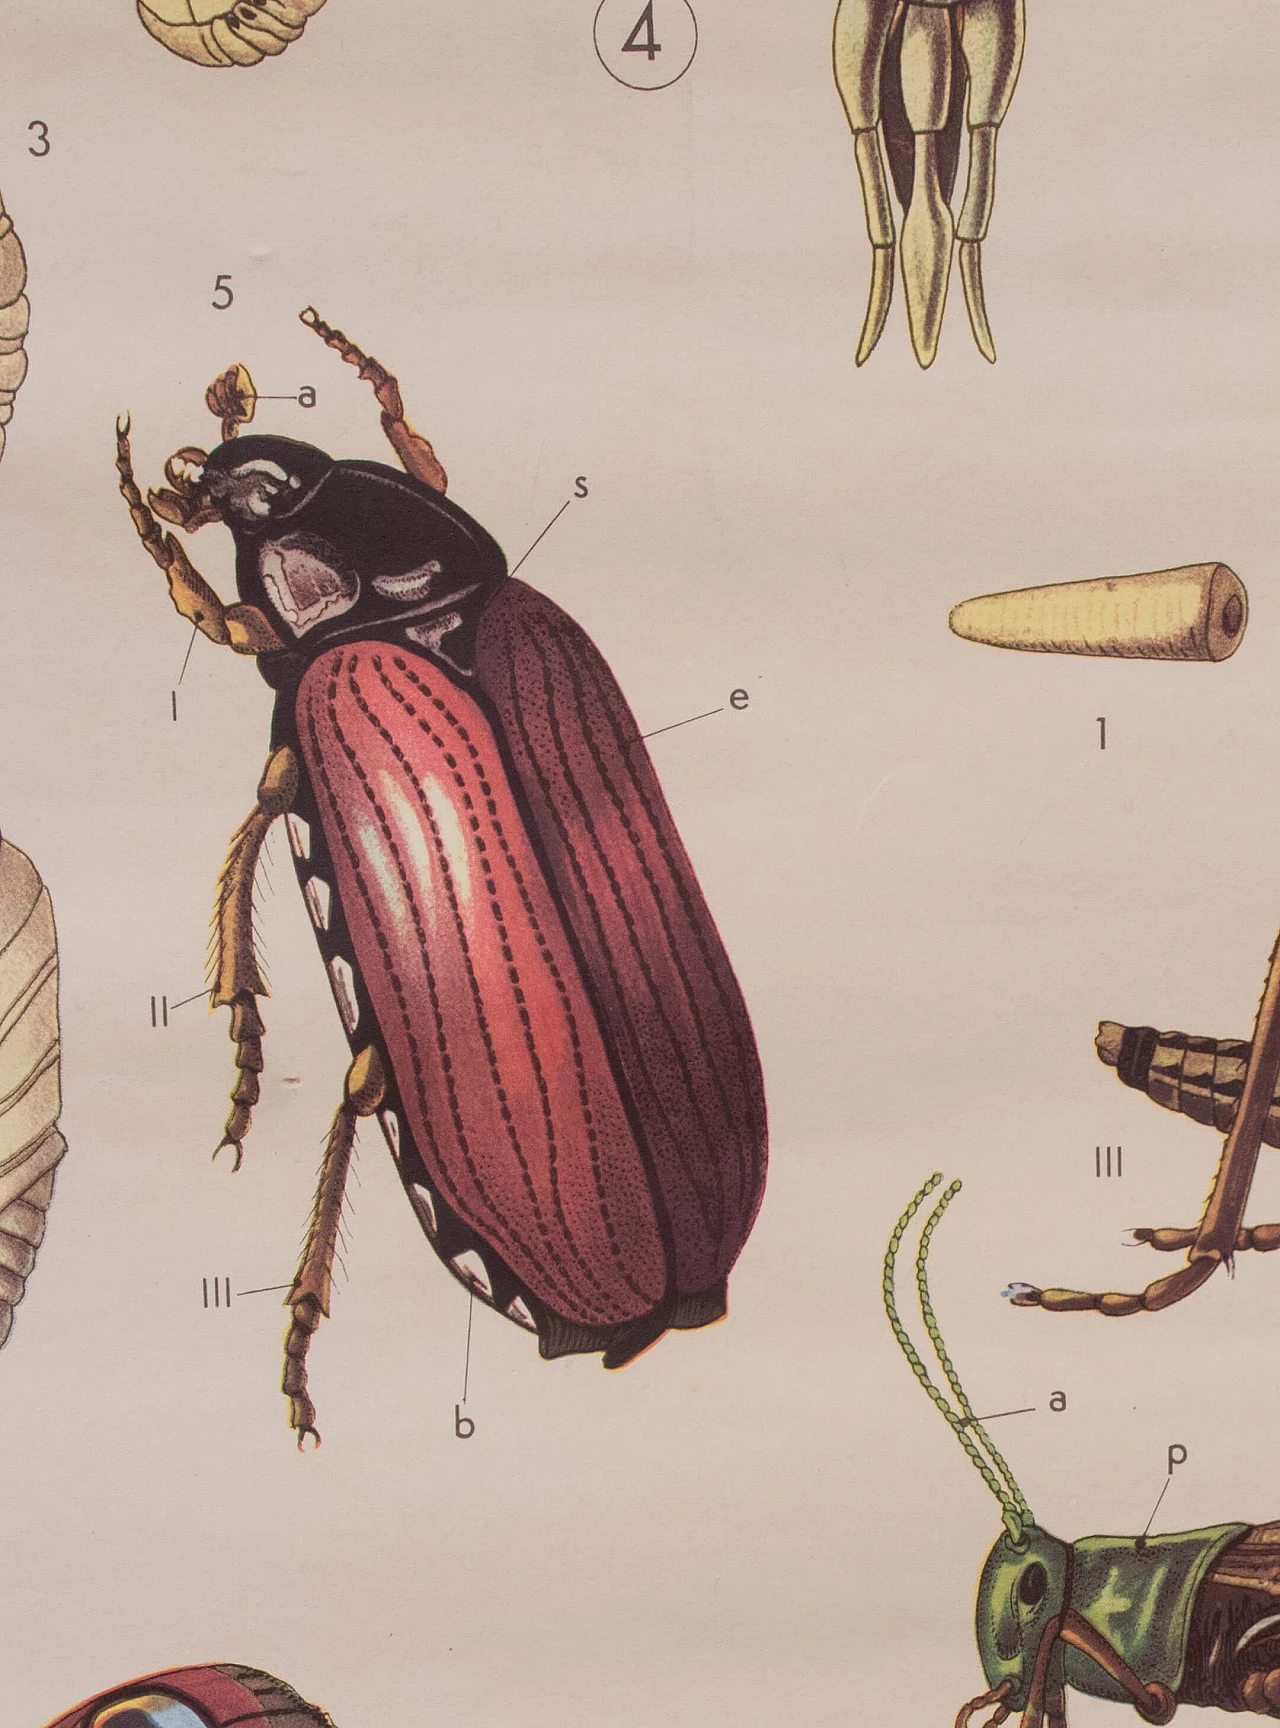 Stampa didattica a tema insetti, Paravia, 1968 1088779